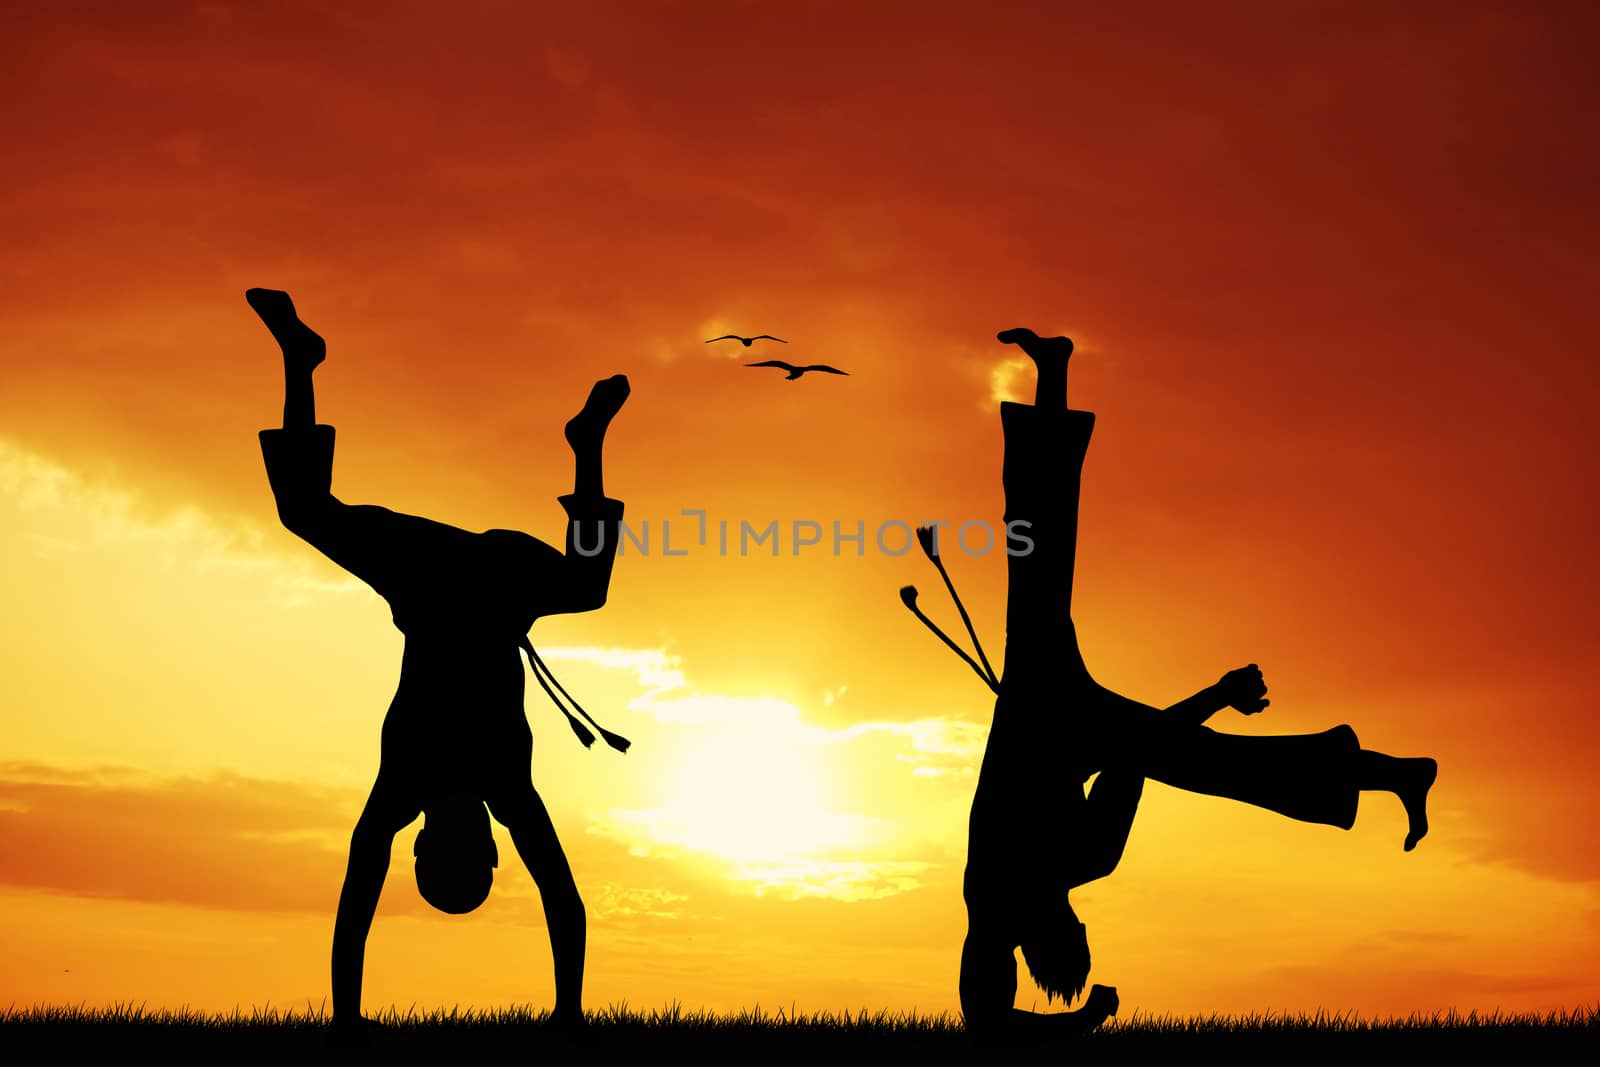 Capoeira at sunset